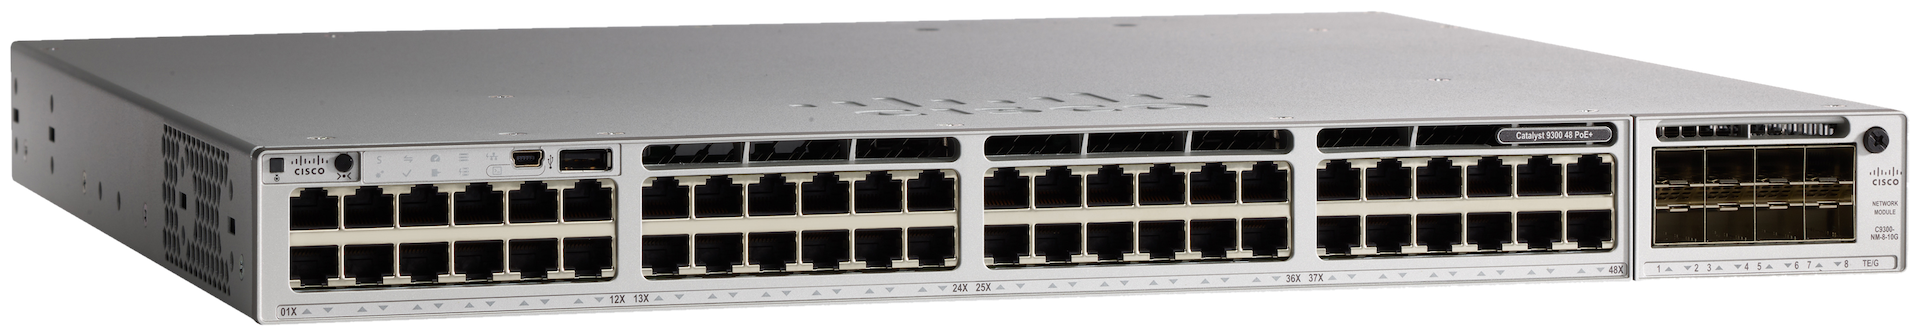 Коммутатор Cisco Catalyst 9300L 48p data, Network Essentials,4x1G Uplink